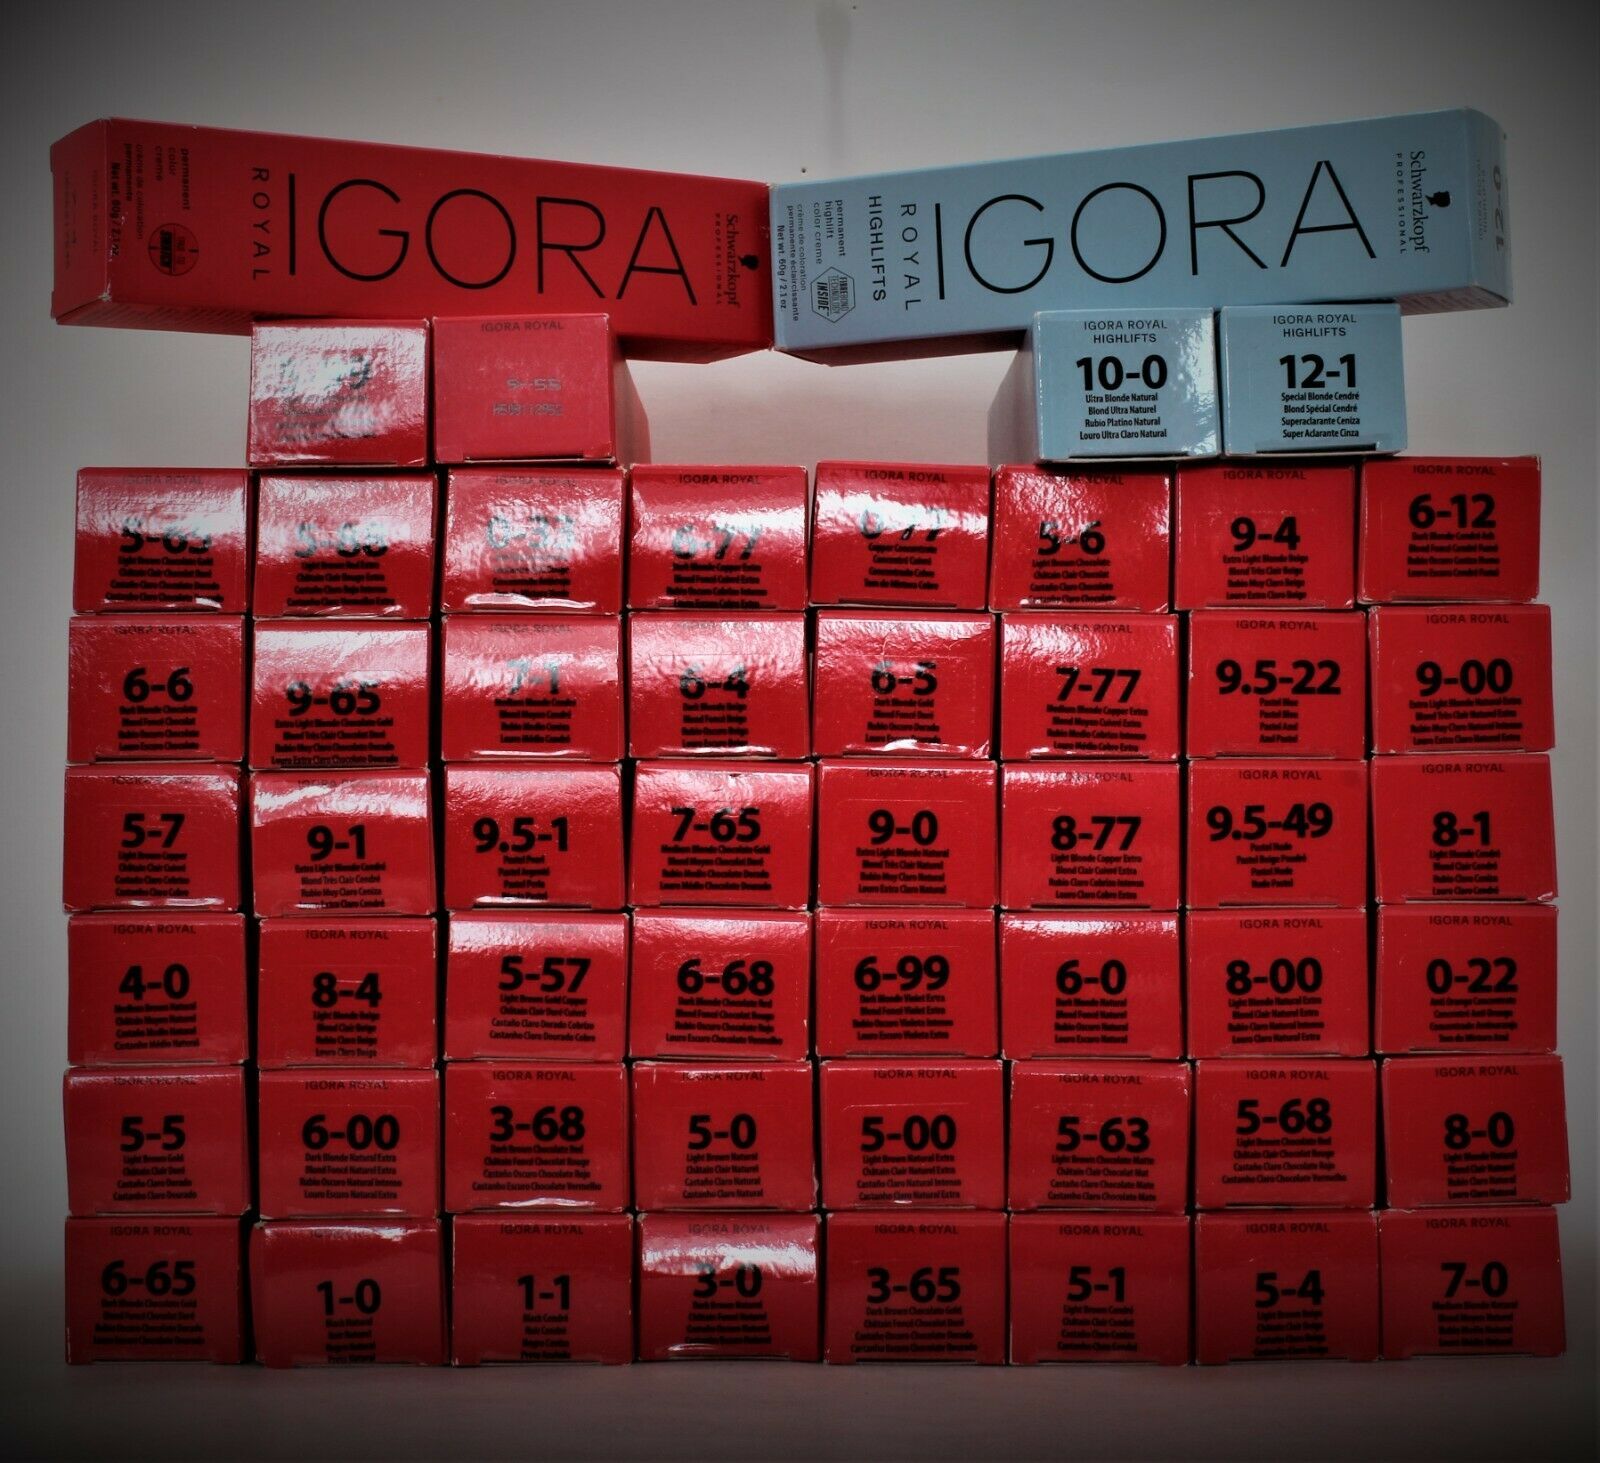 Schwarzkopf Igora Royal Permanent Hair Color Creme 2.1 oz, Select Colors